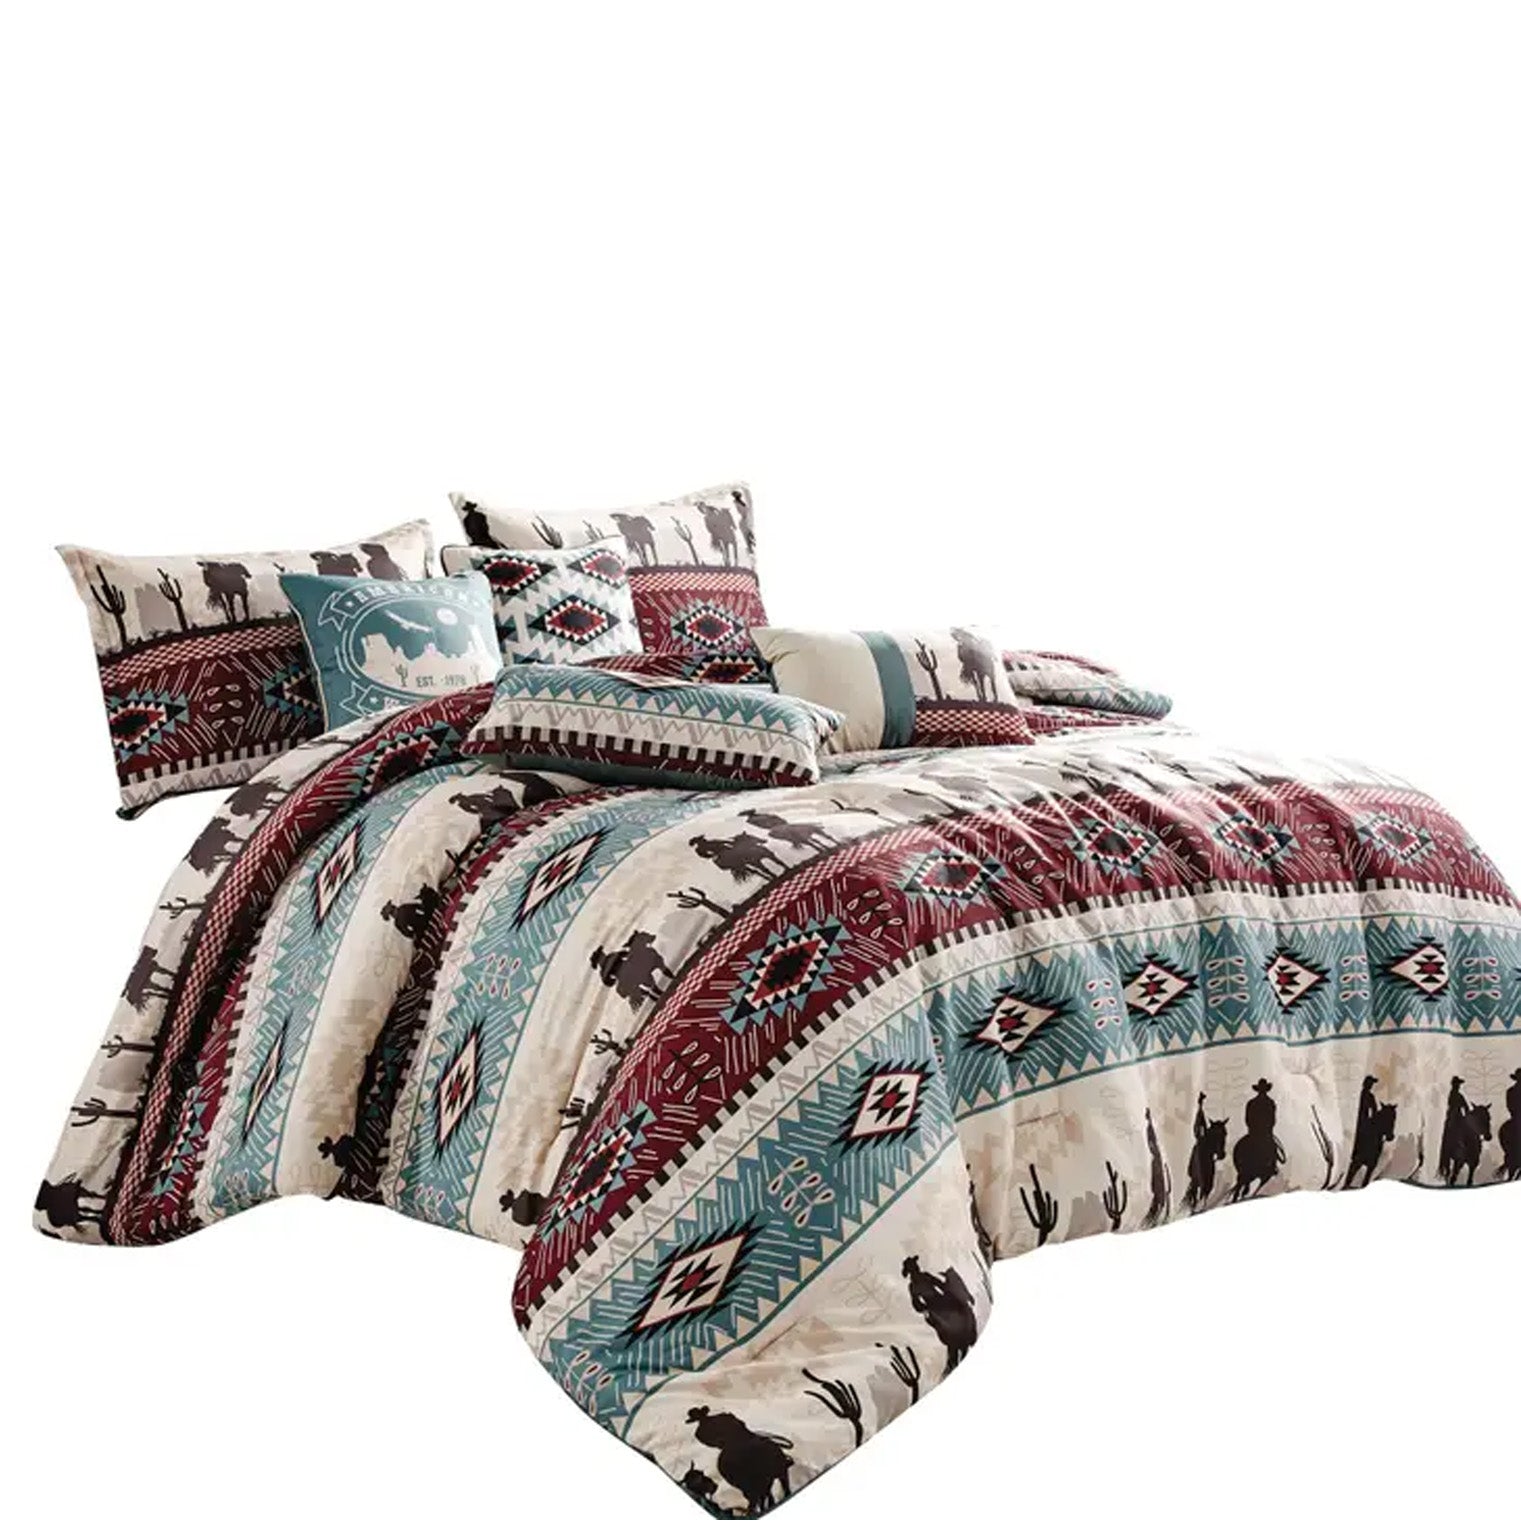 Cowboy Aztec Comforter - 7 Piece Set